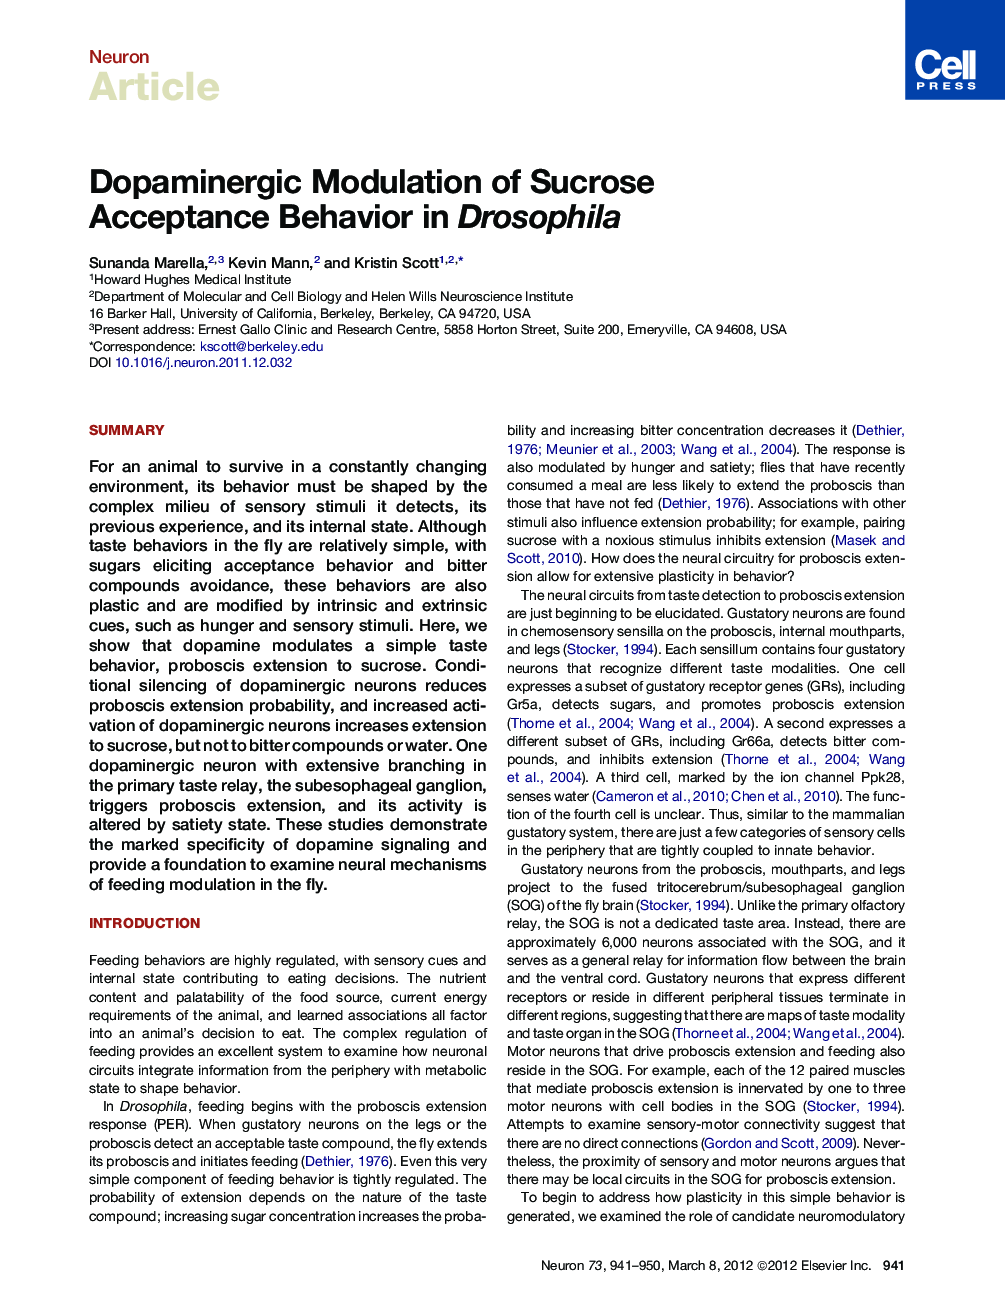 Dopaminergic Modulation of Sucrose Acceptance Behavior in Drosophila